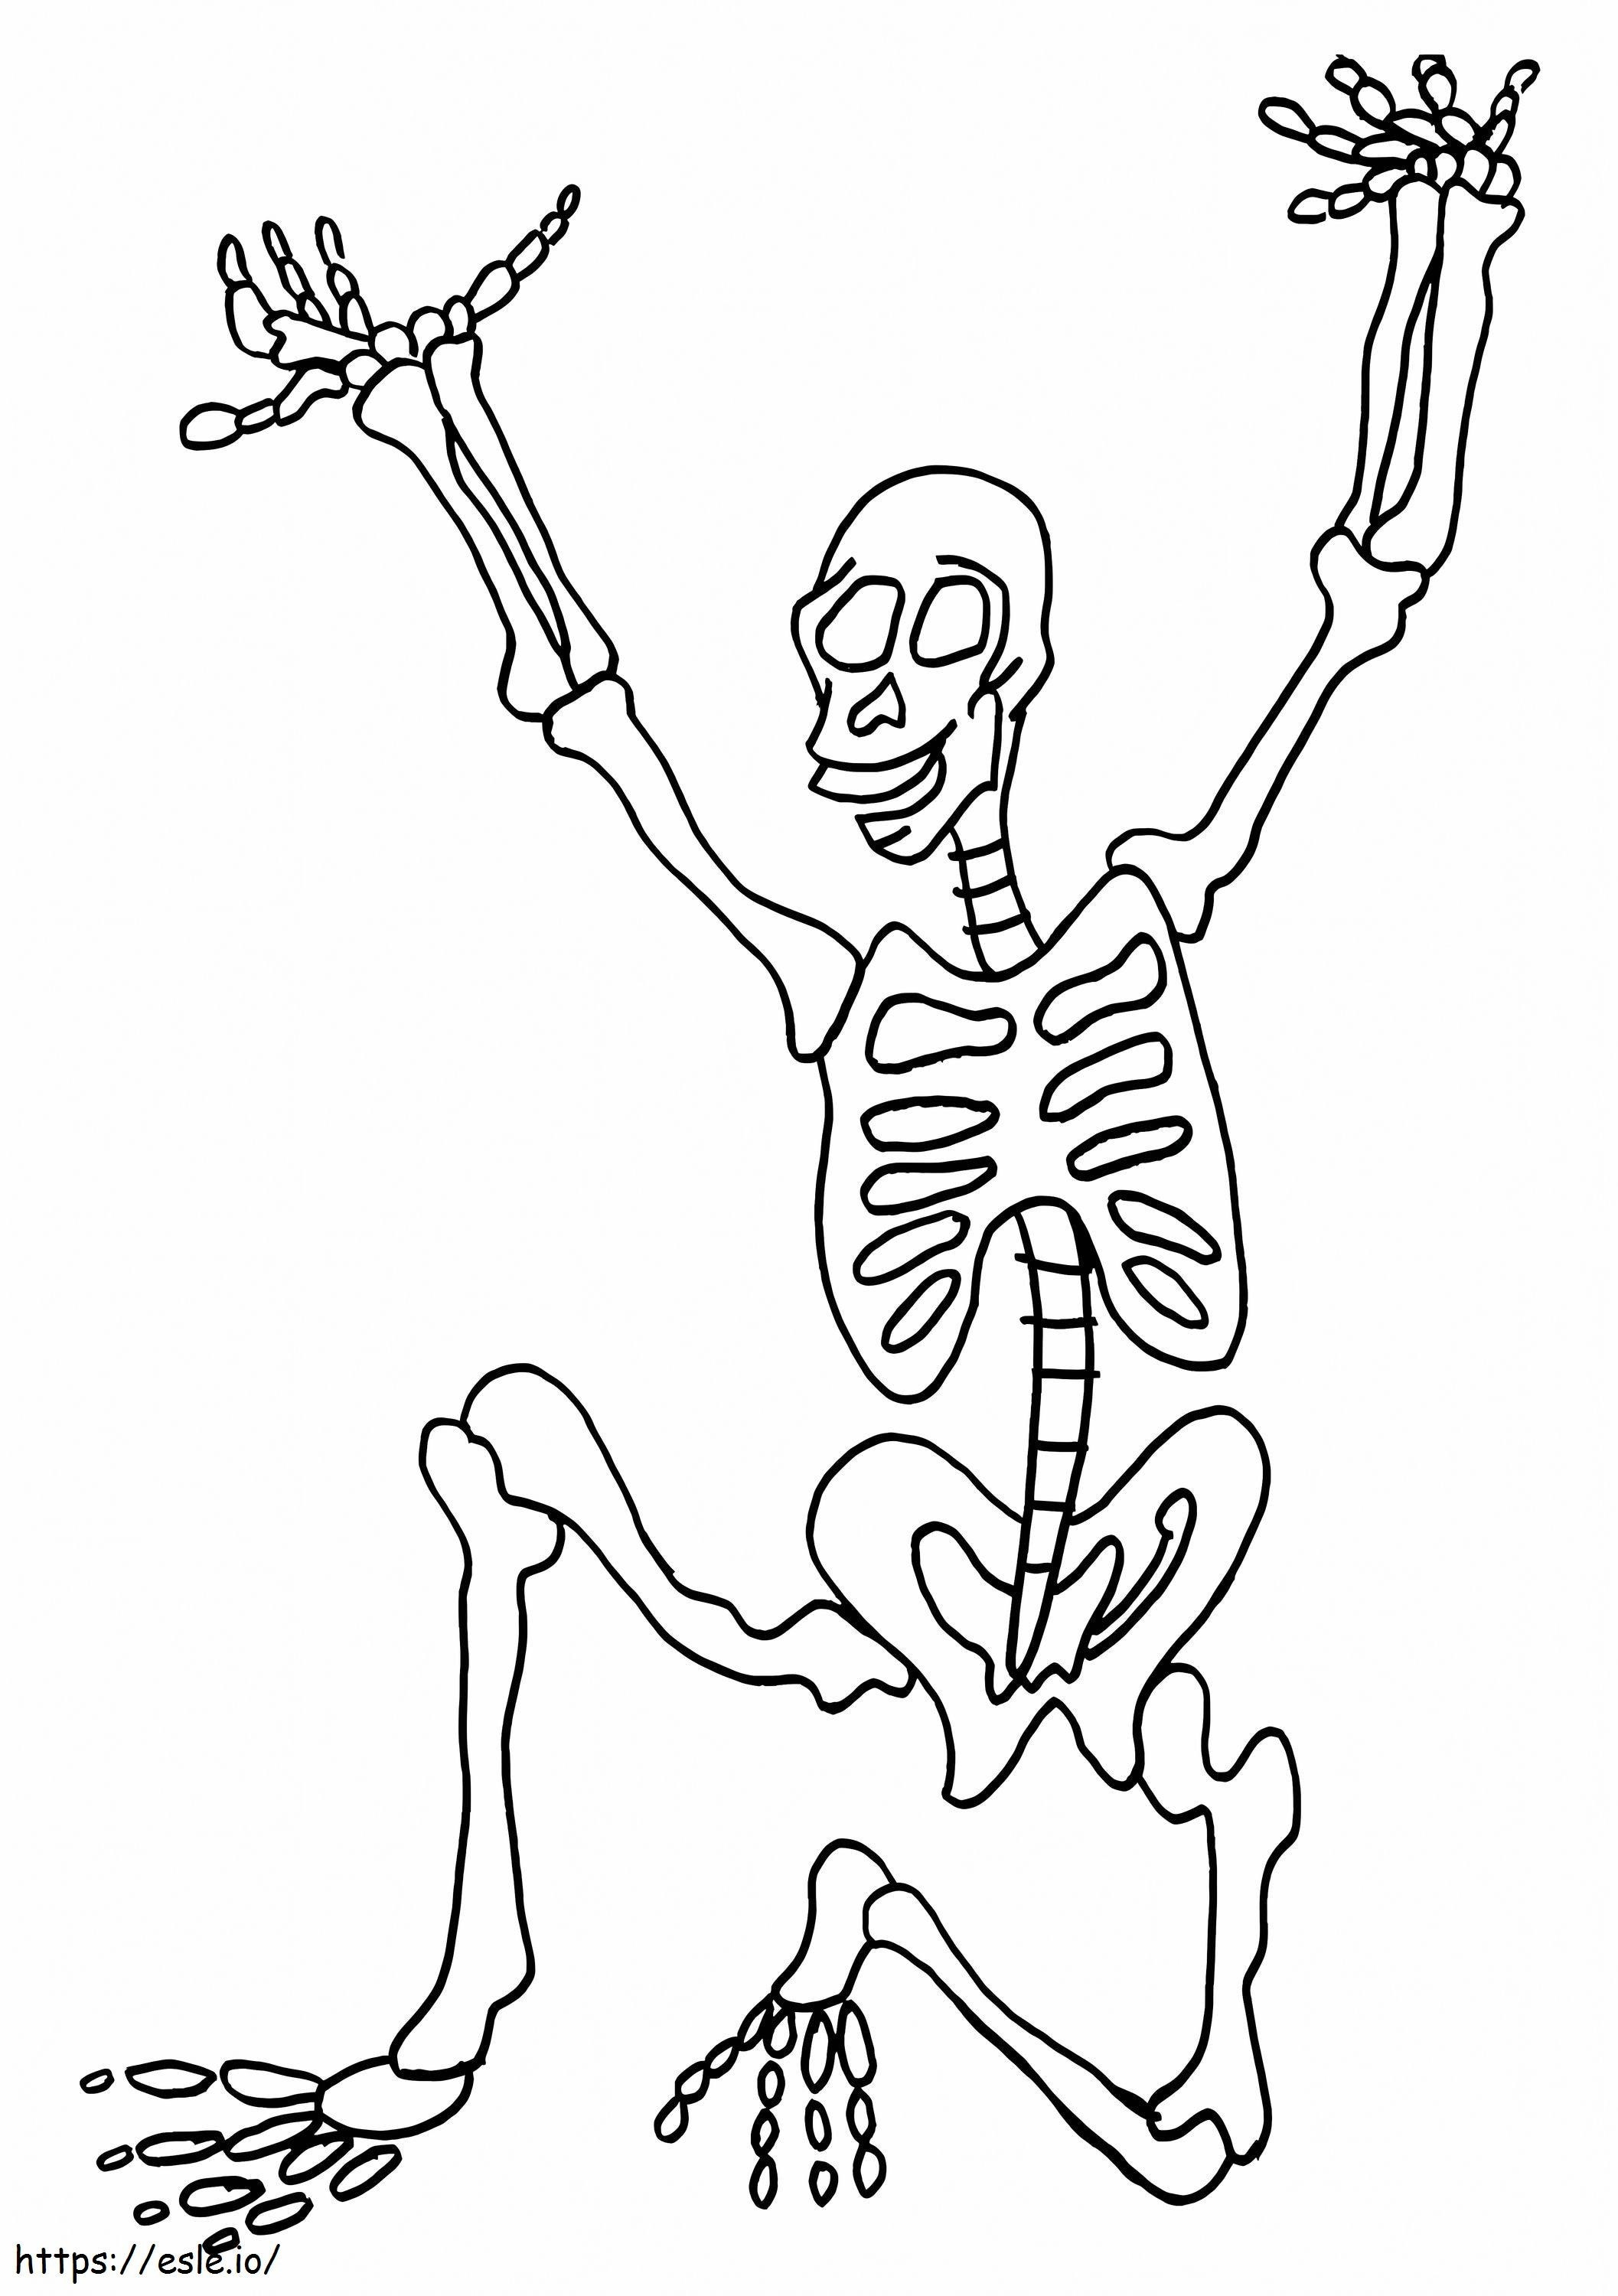 Esqueleto fofo para colorir